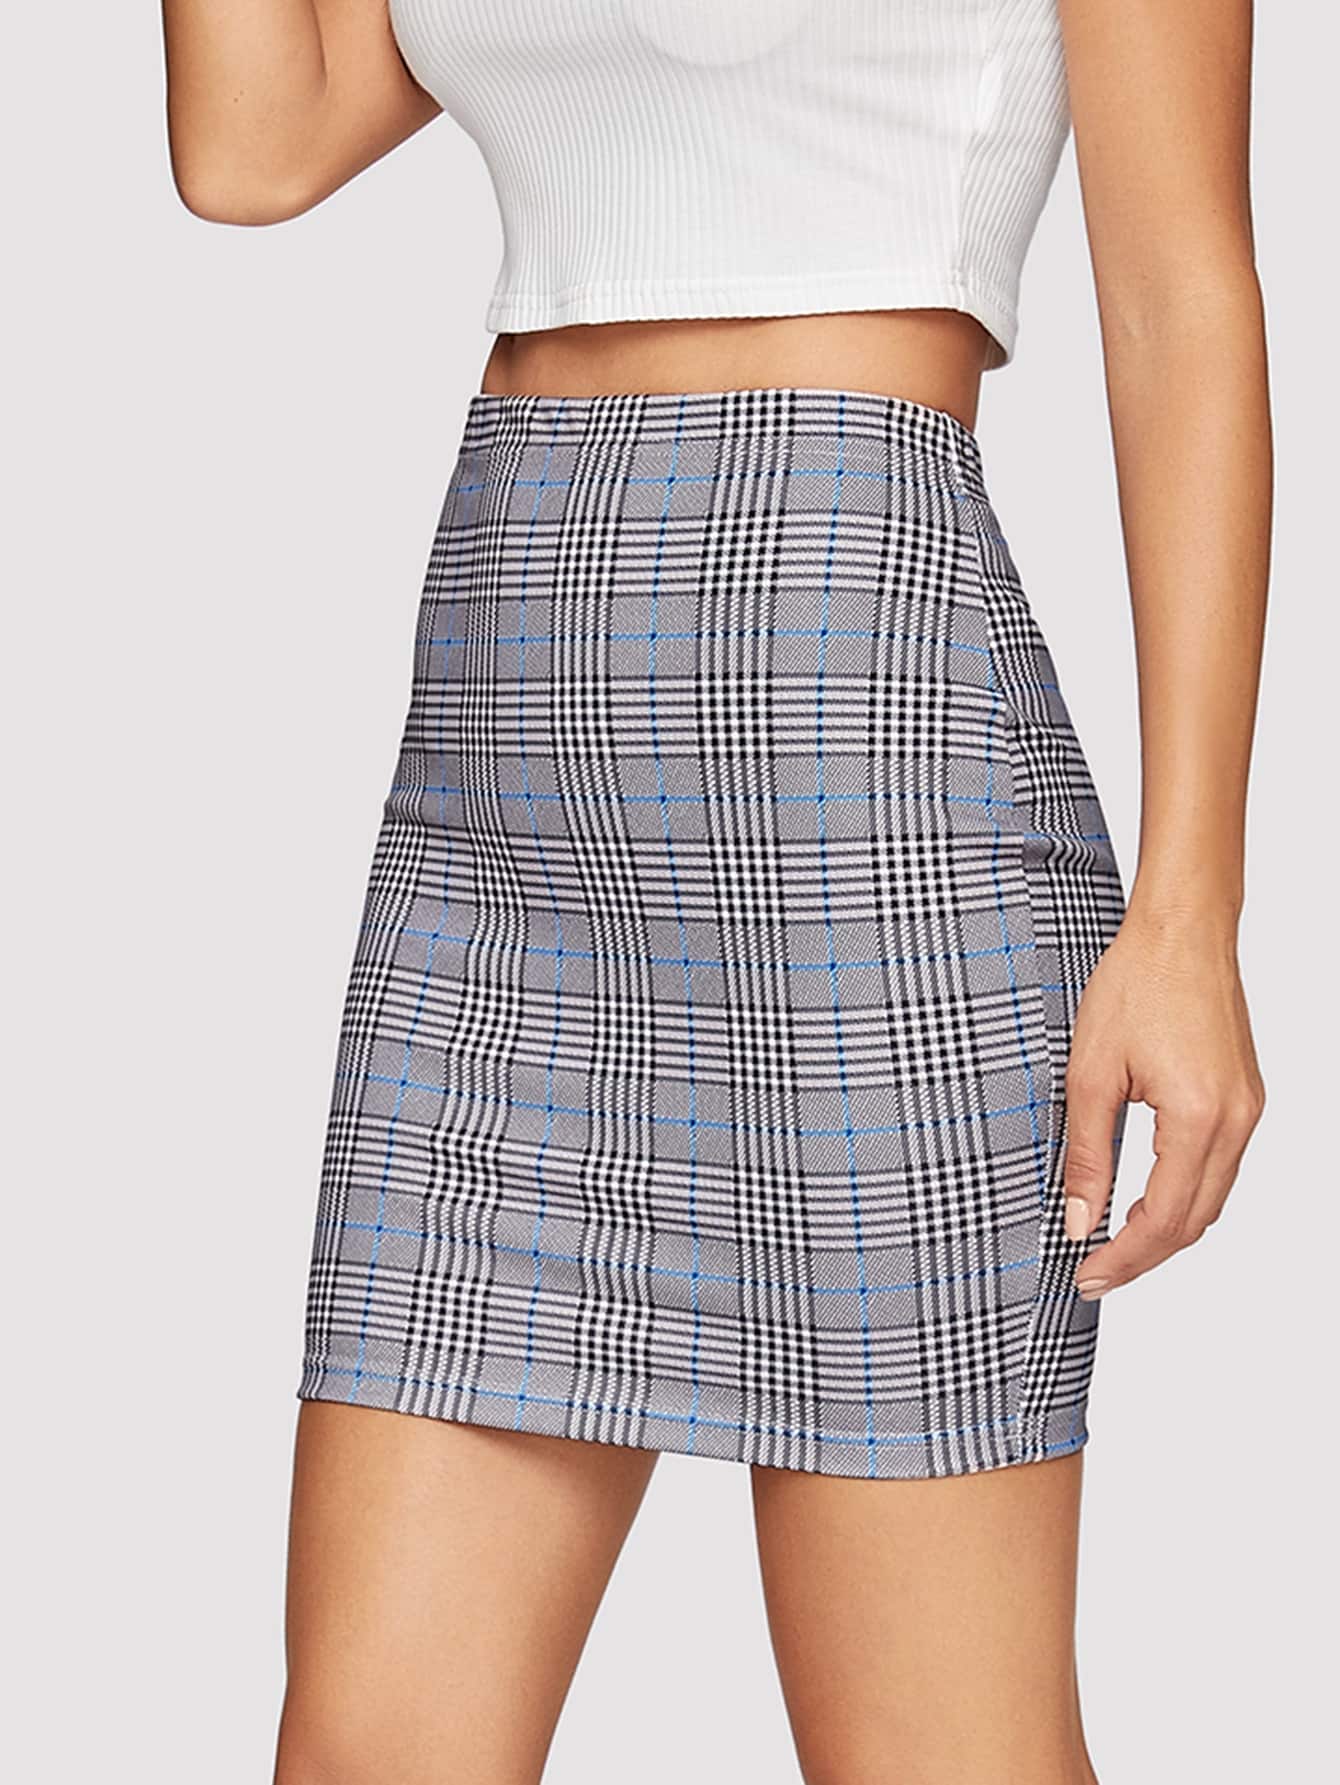 Short Plaid Bodycon Skirt